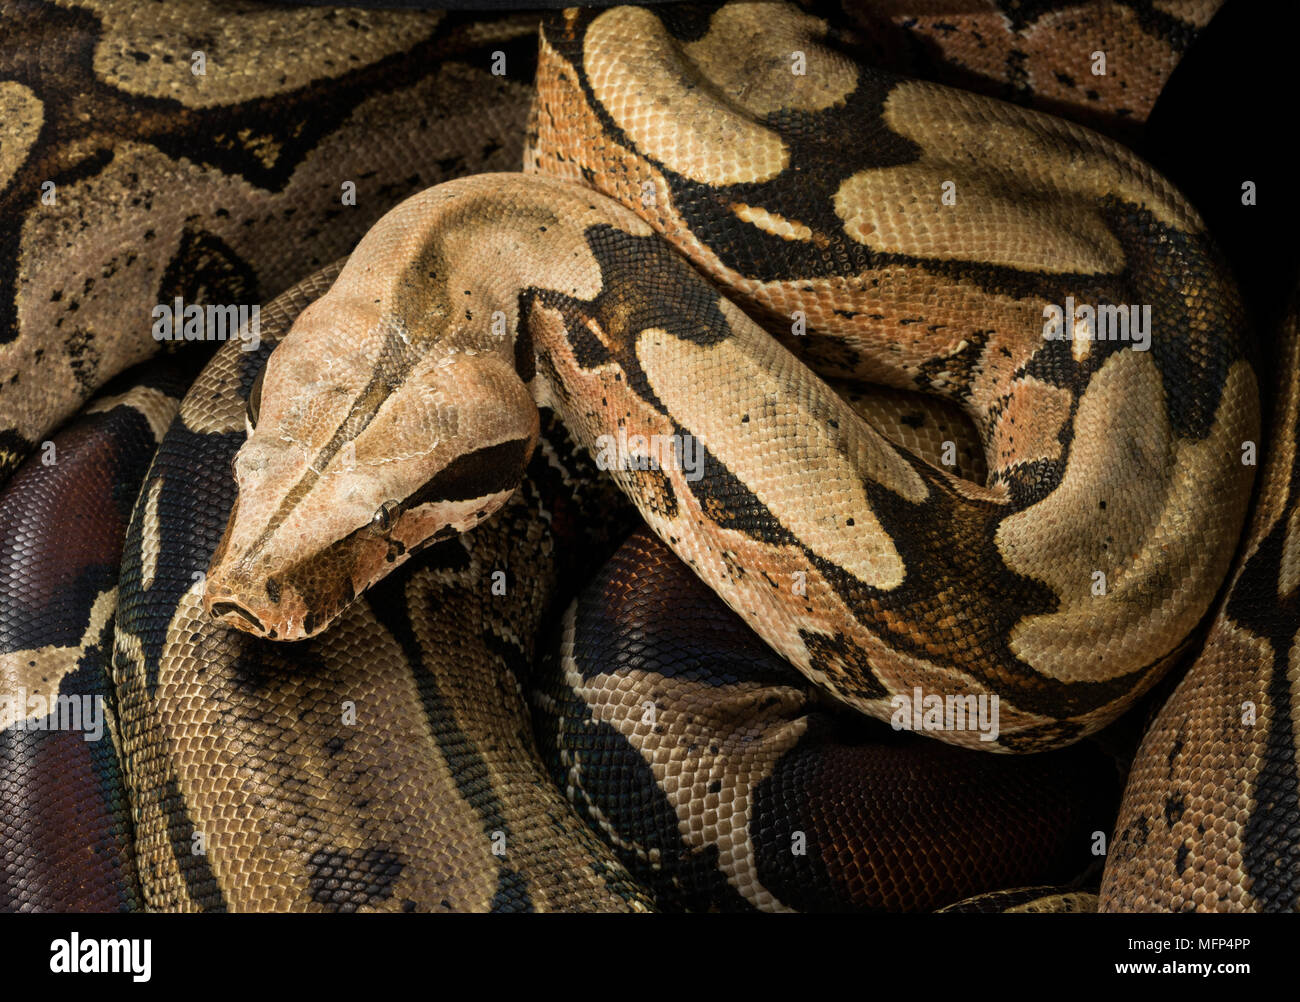 Close up di Boa Constrictor constrictor - Suriname Guyana. Maschio Foto Stock